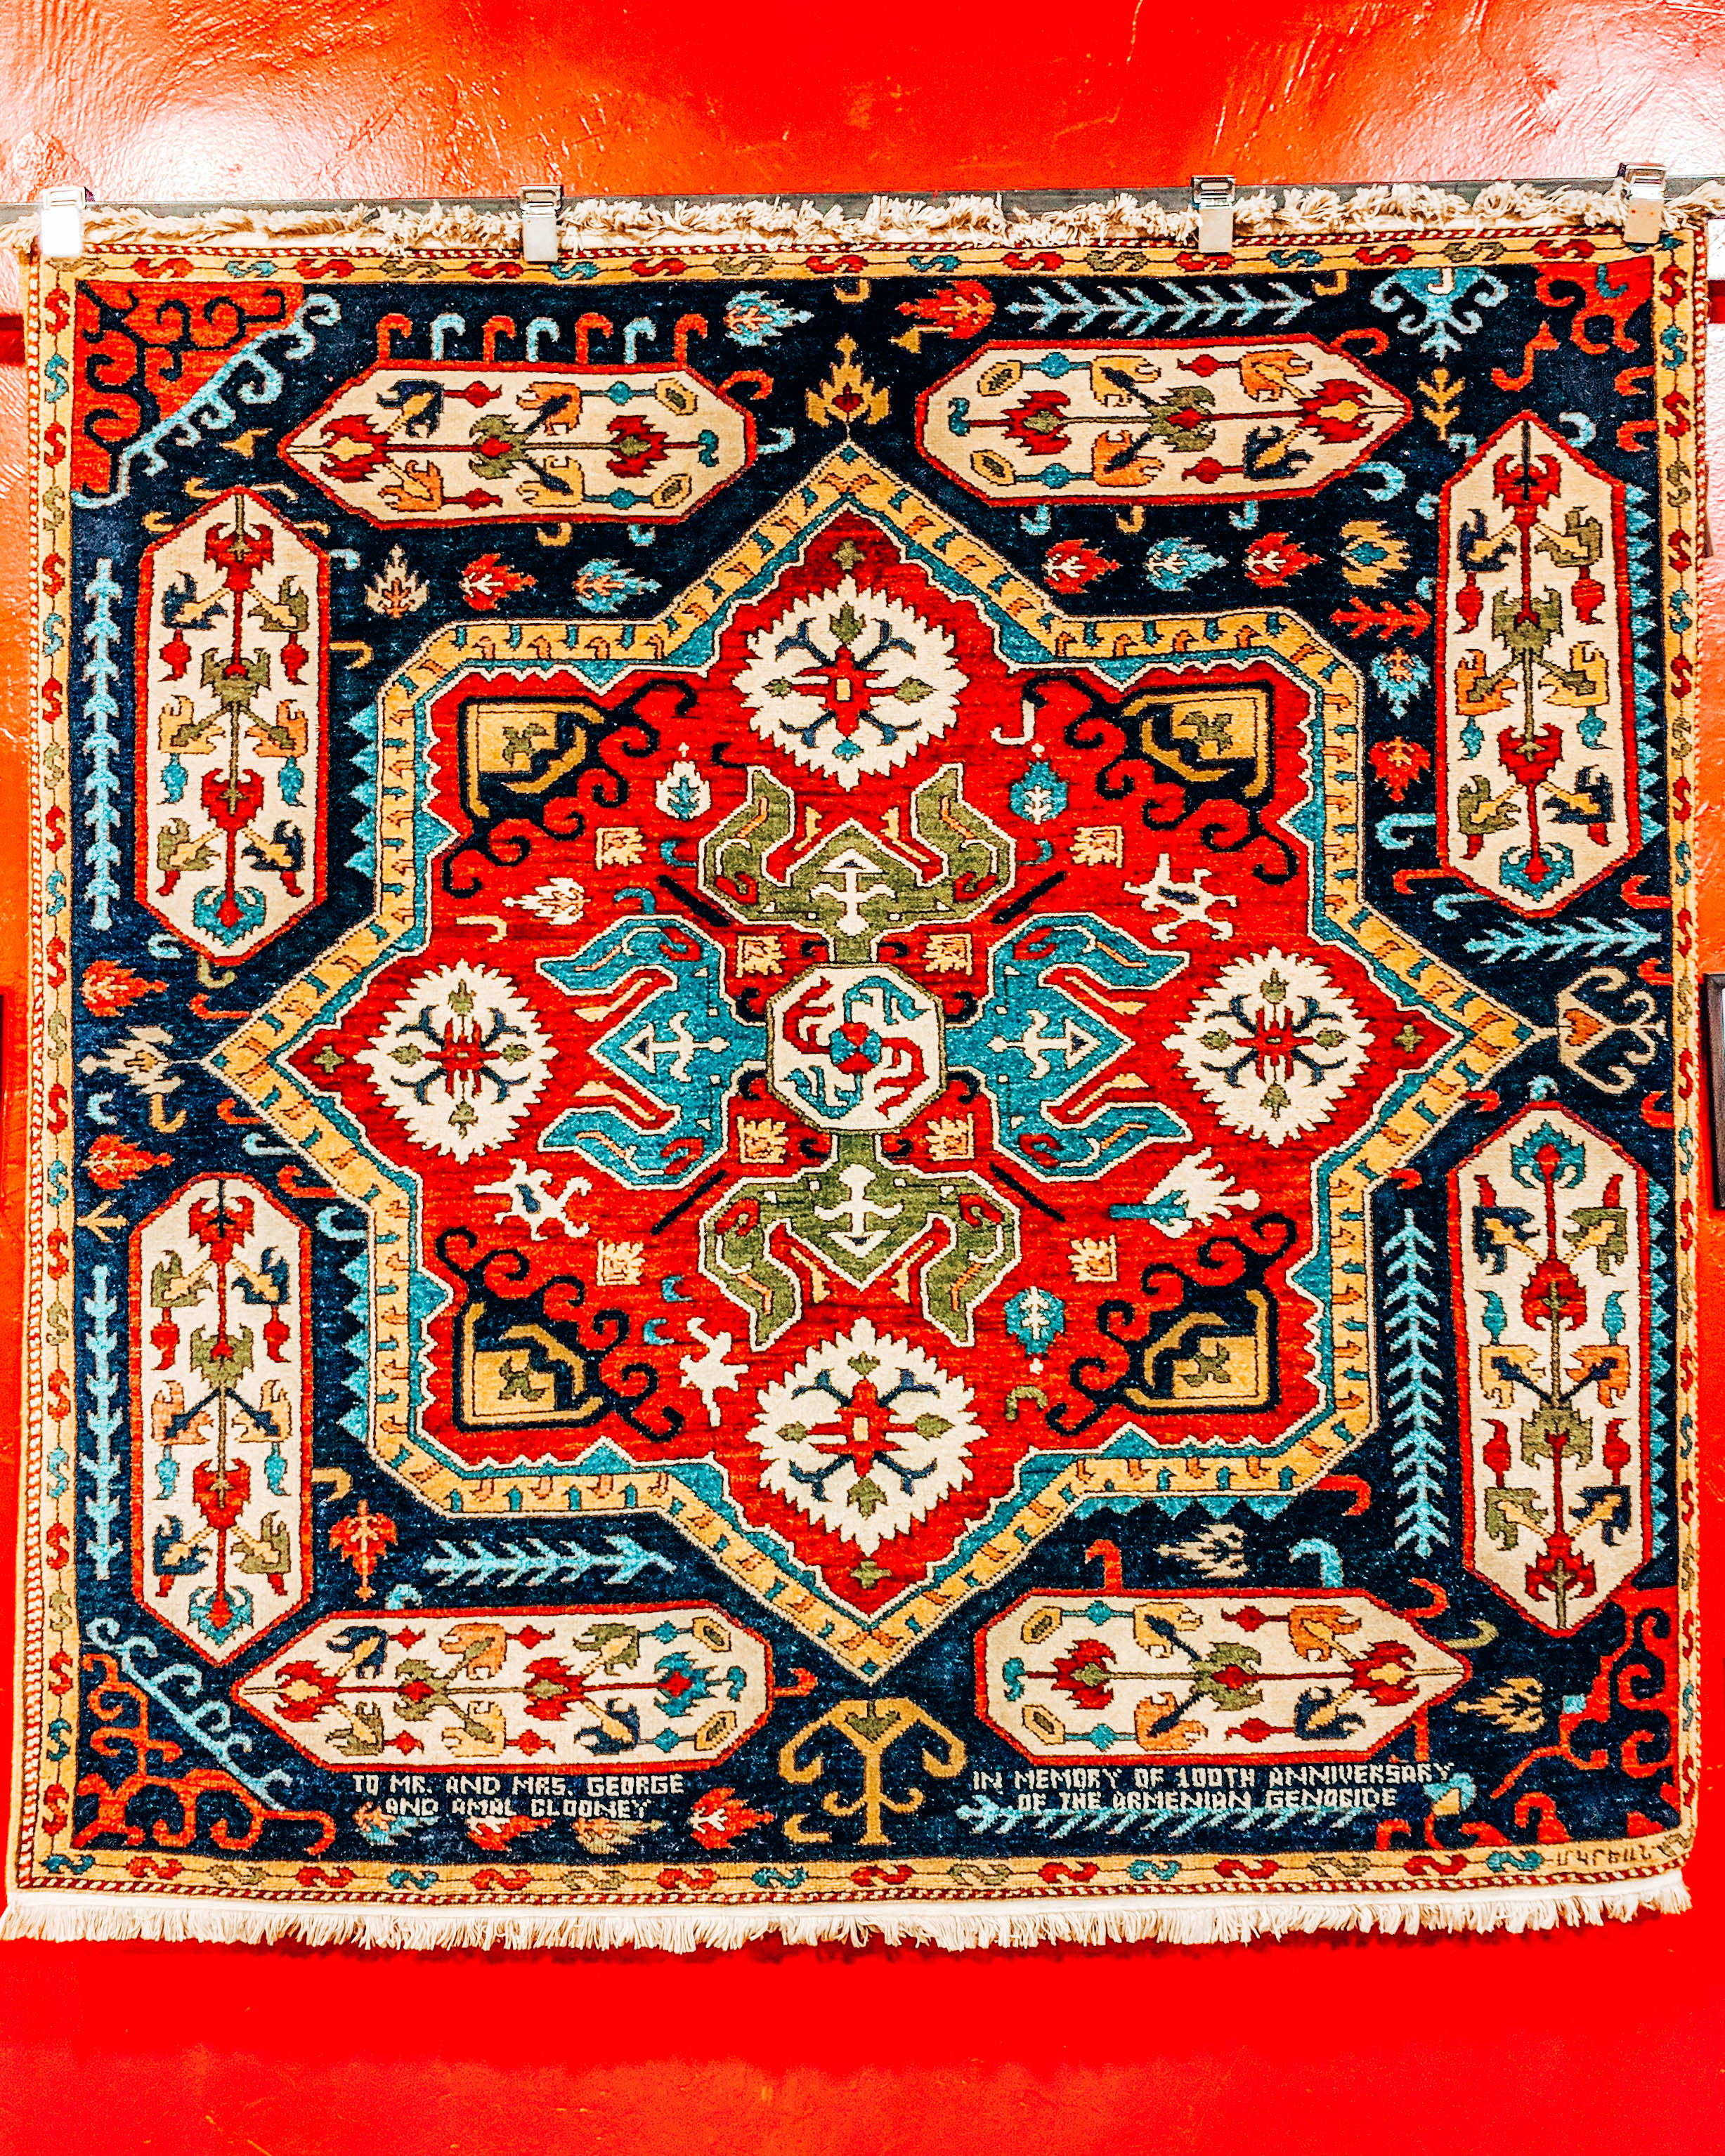 Armenian rug Megerian carpet company museum genecide commemoration George and Amal Clooney